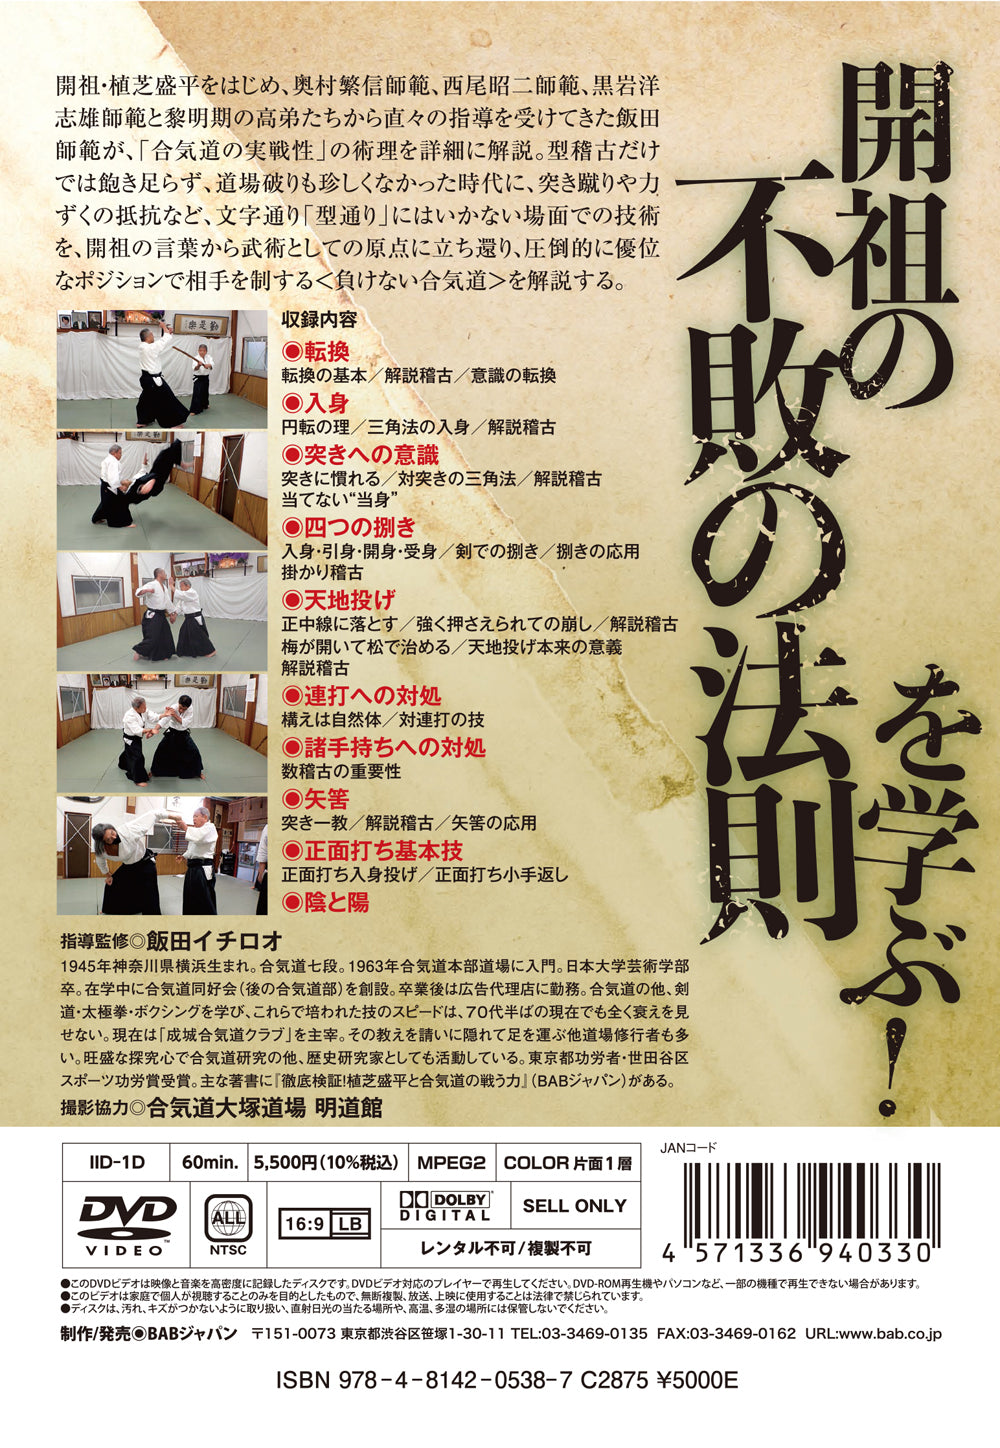 Morihei Ueshiba's Invincible Aikido DVD by Ichiro Iida